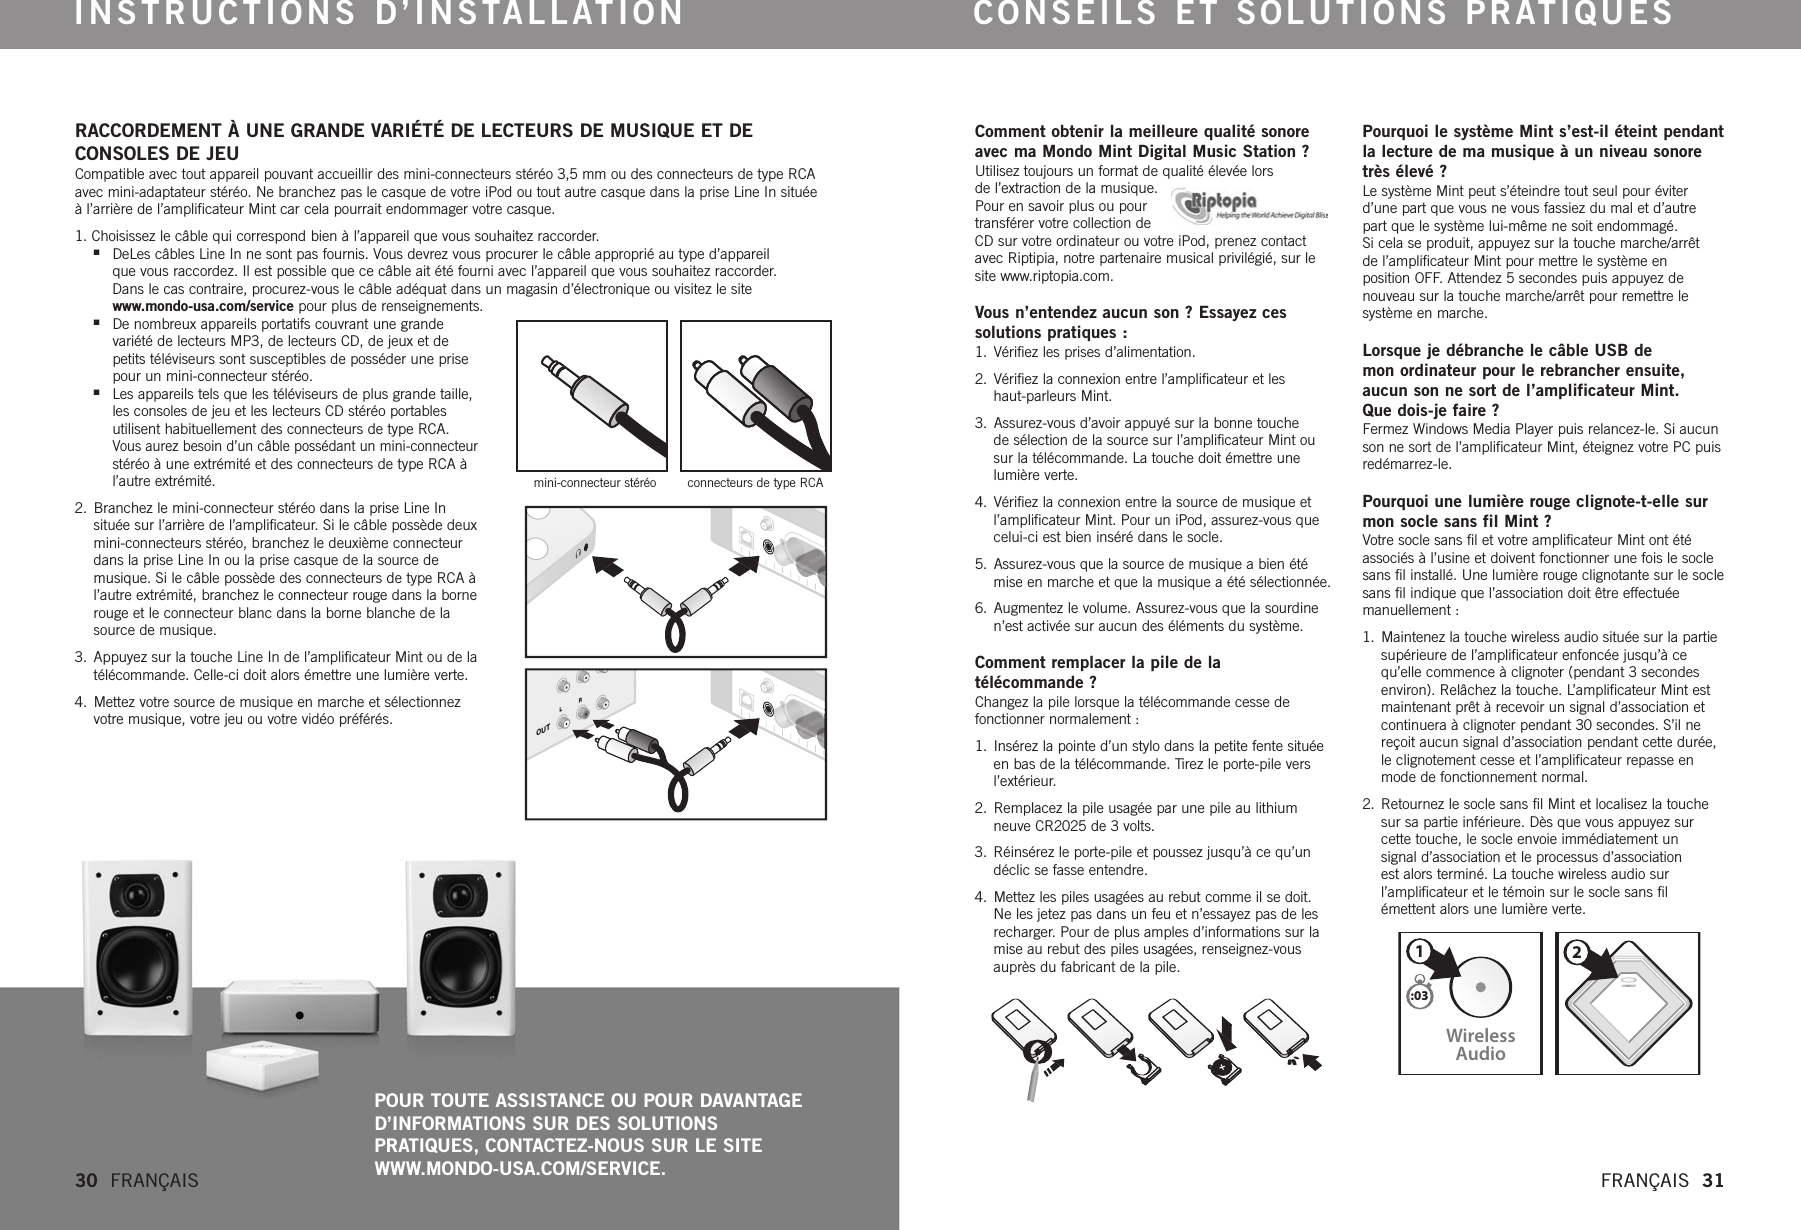 krautkramer dms 2 user manual pdf